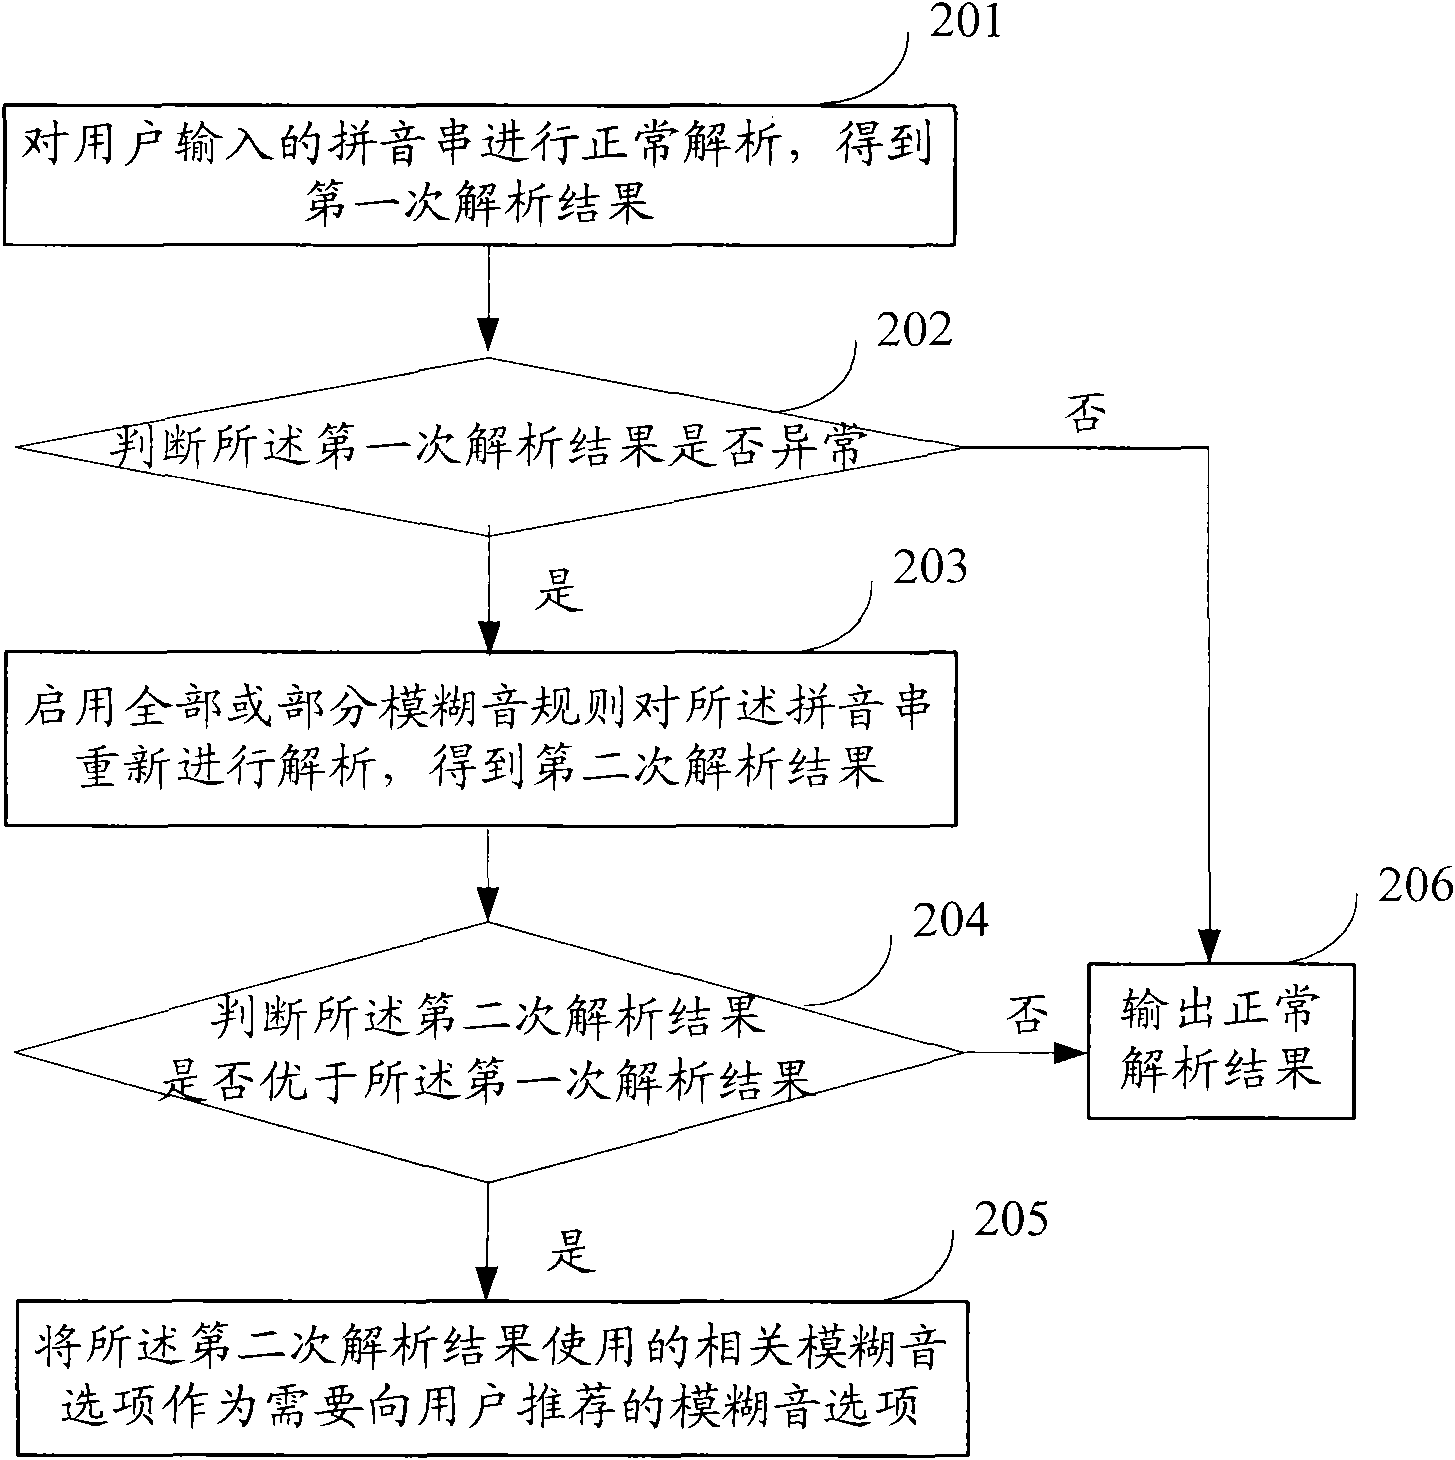 Pinyin input method and device